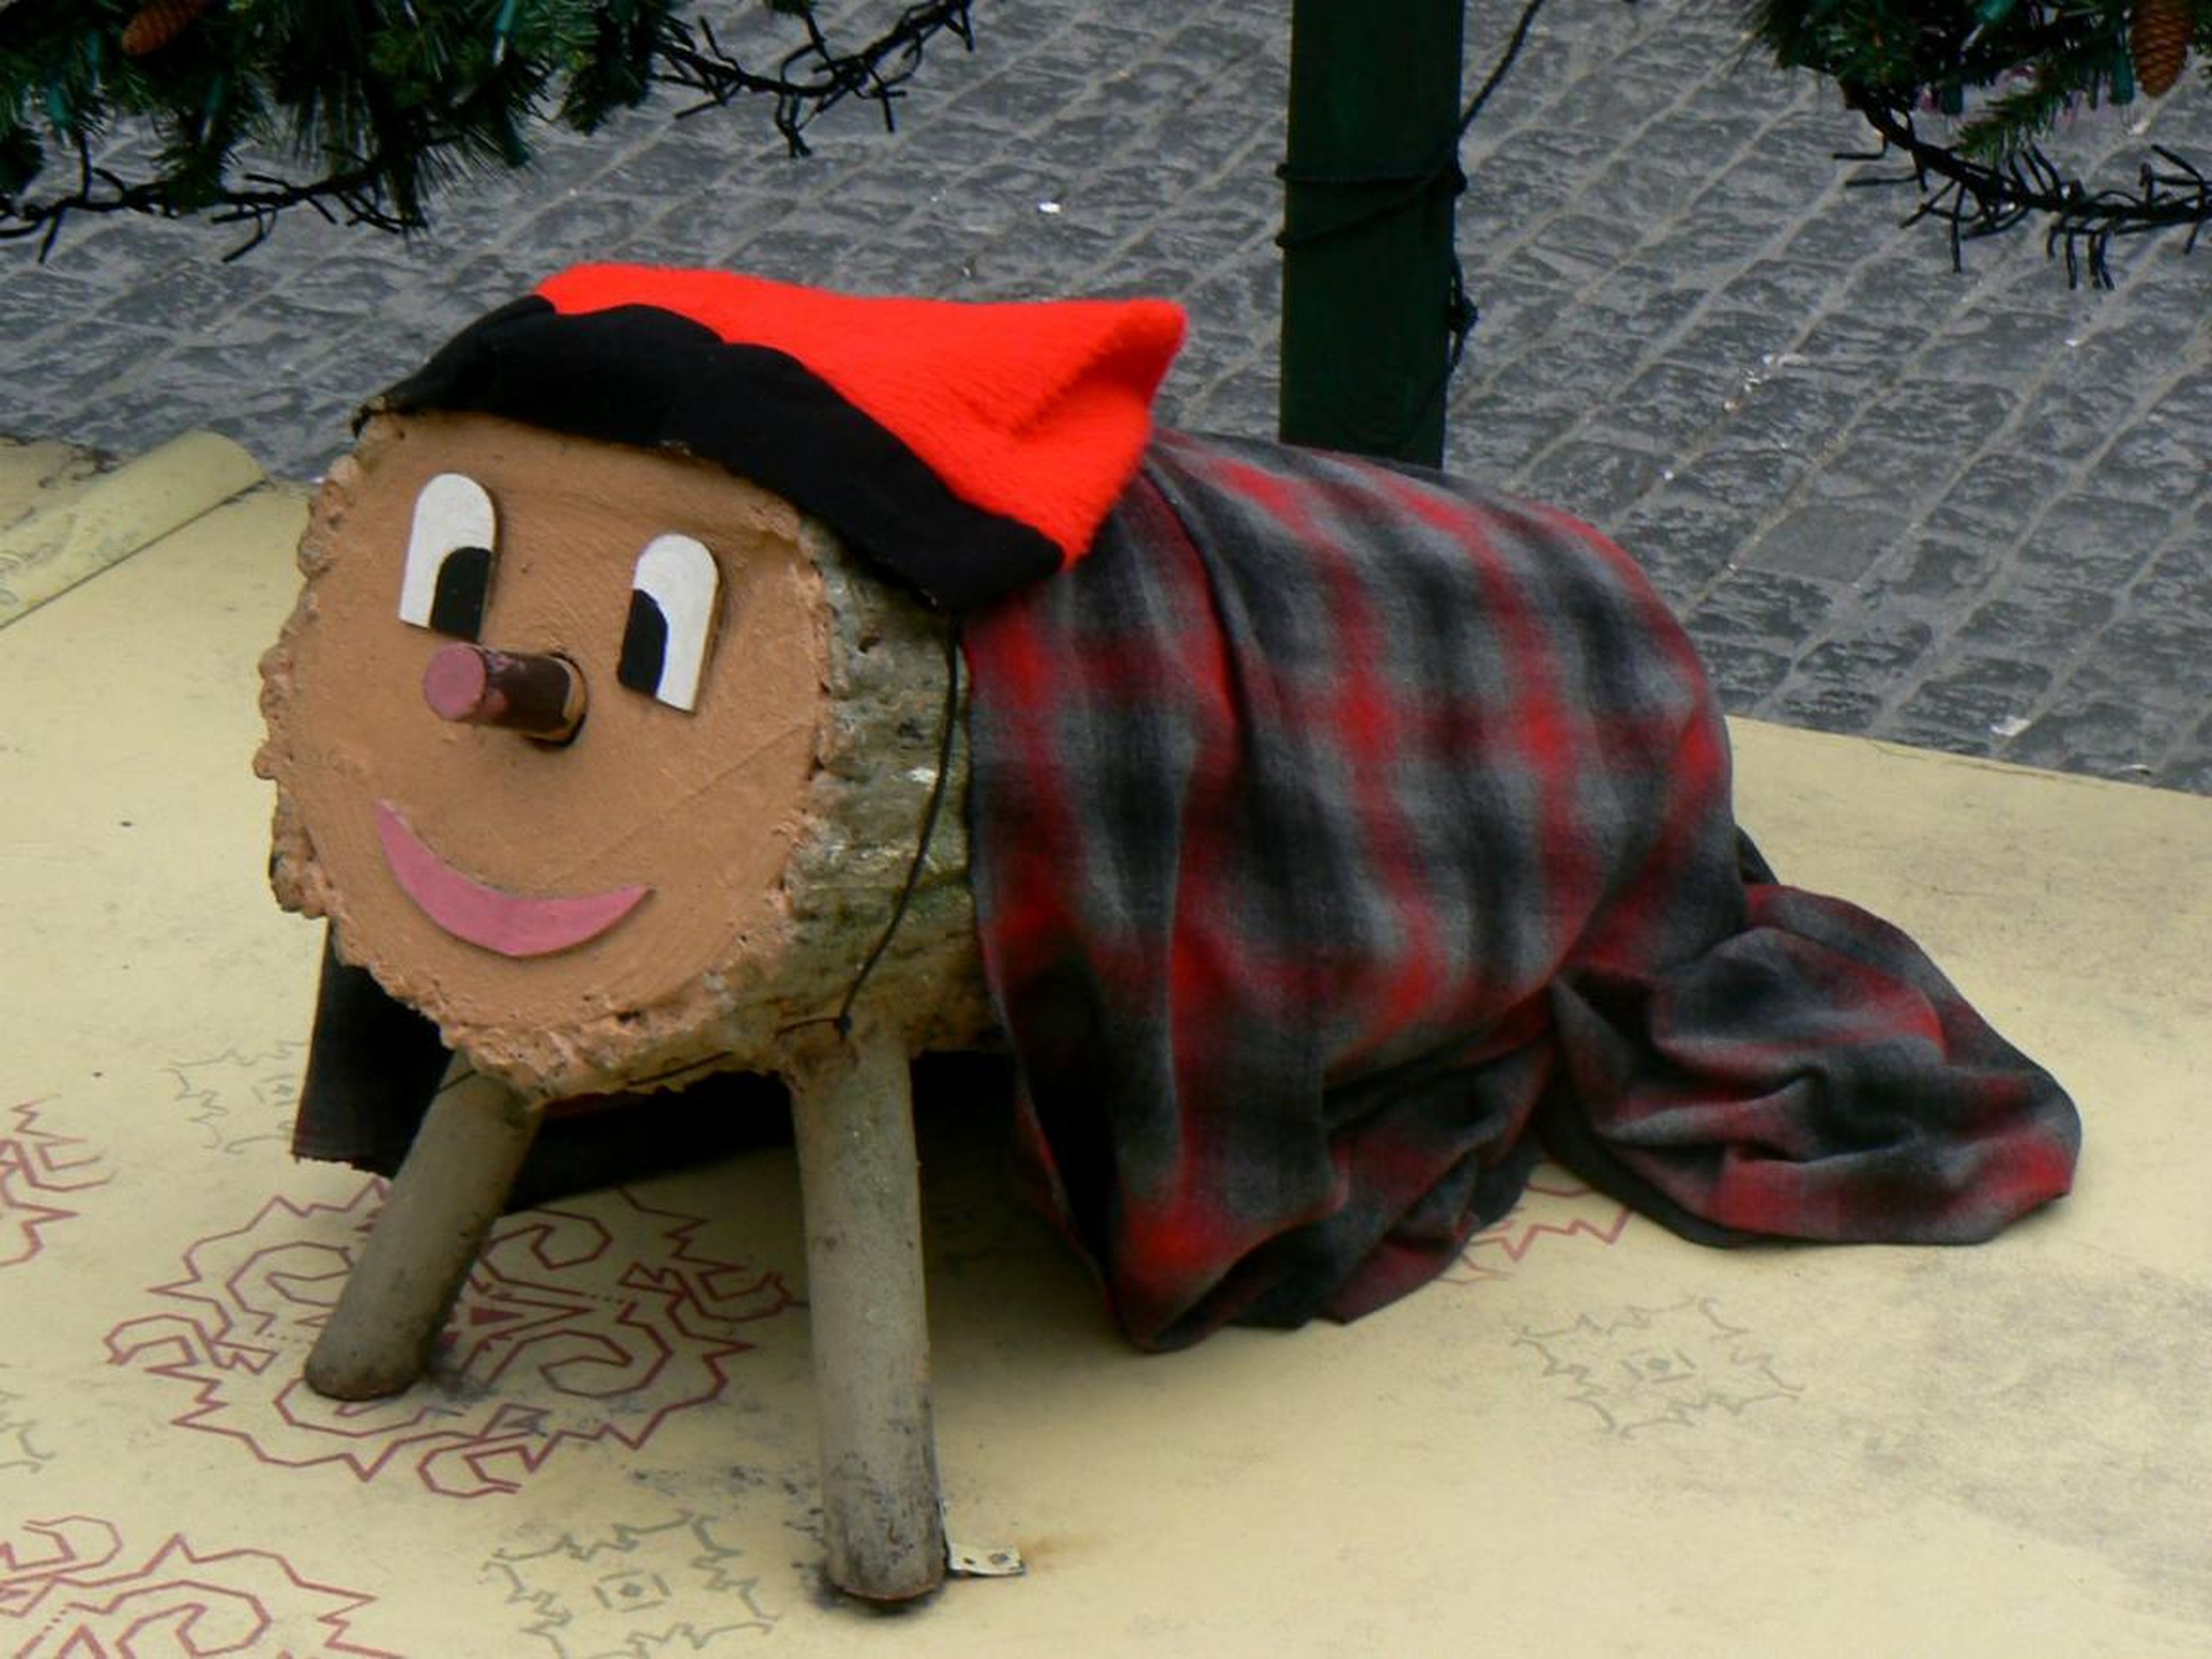 A Tió de Nadal figurine under a Christmas tree in Catalonian Spain.